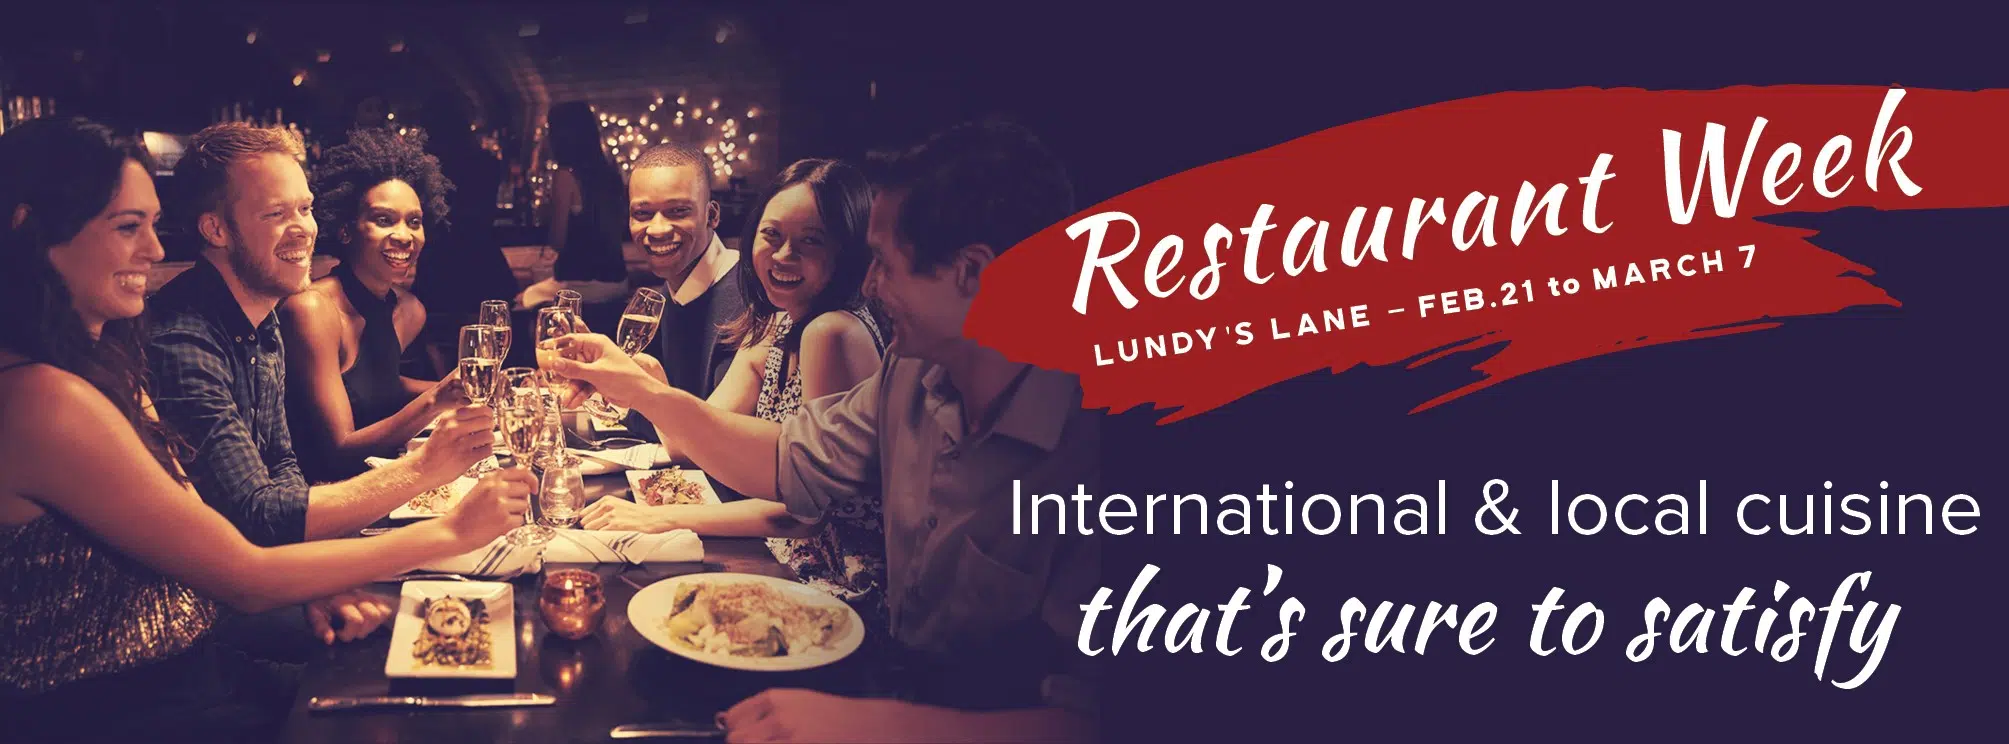 Restaurant Week on Lundy’s Lane